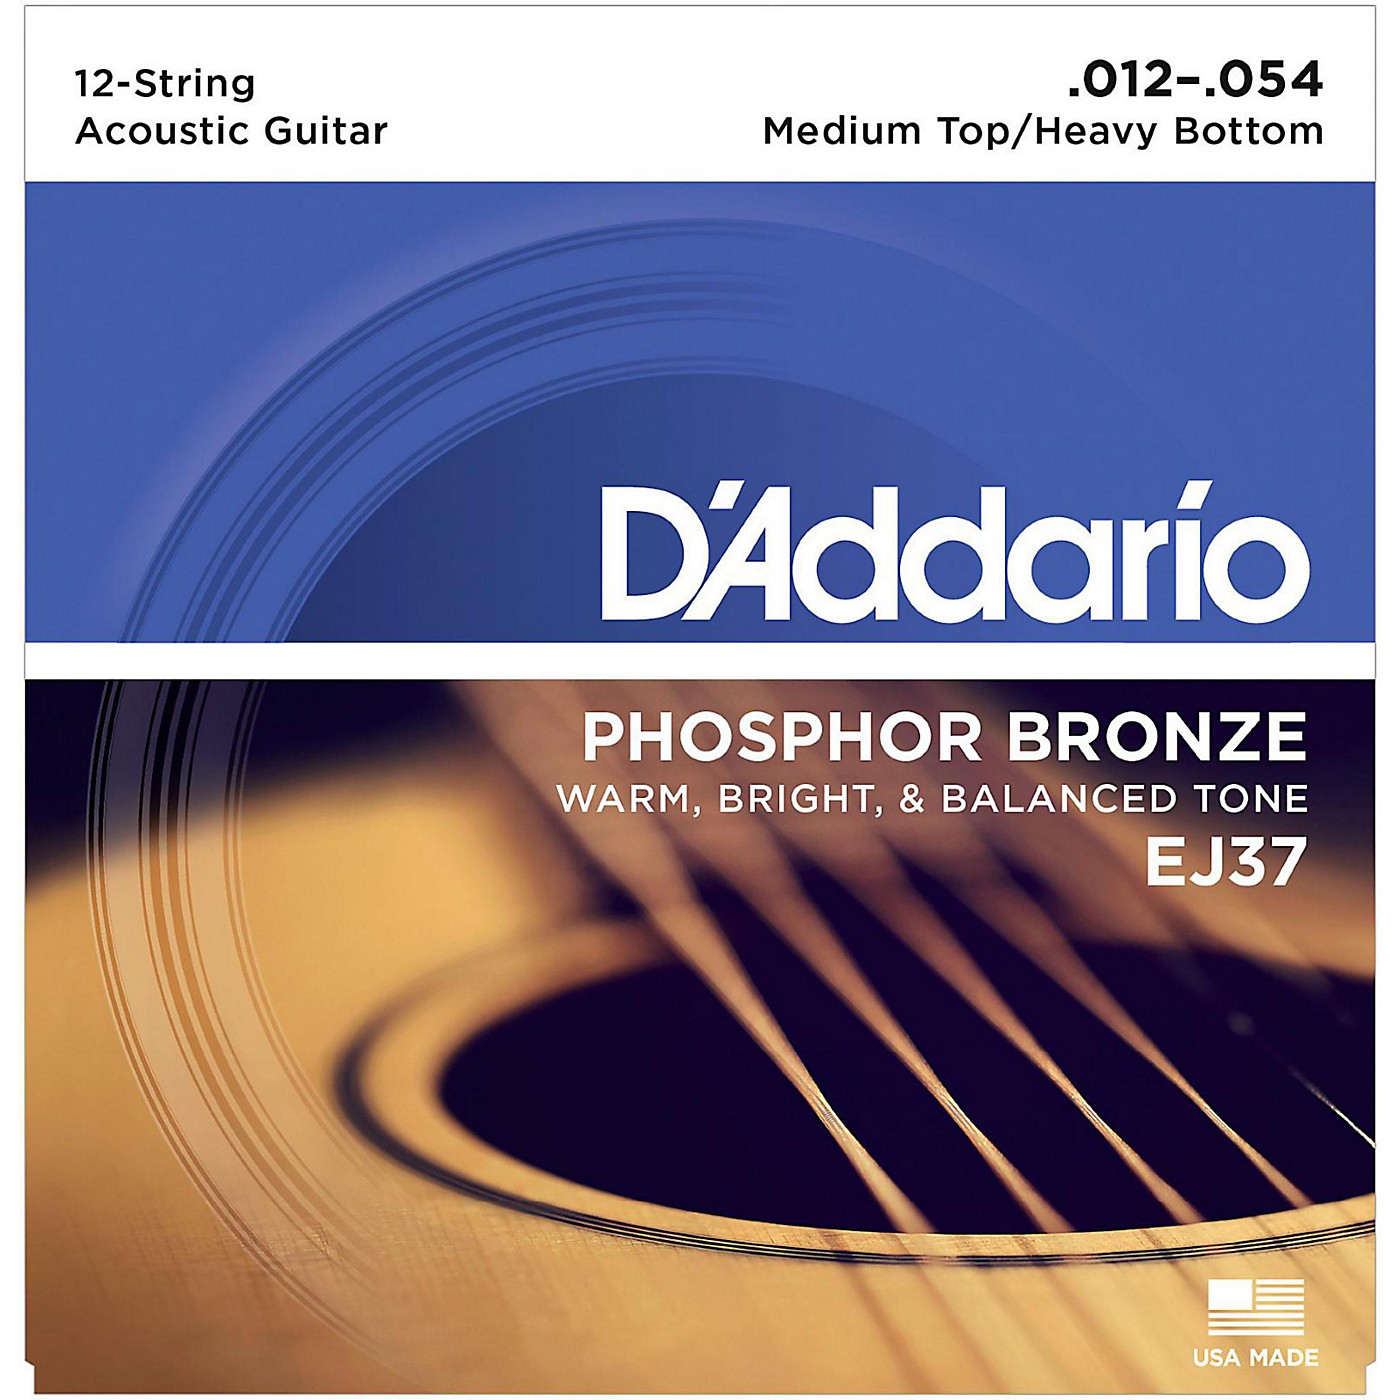 D'Addario EJ37 12-String Phosphor Bronze Acoustic Guitar Strings - Medium Top Heavy Bottom thumbnail